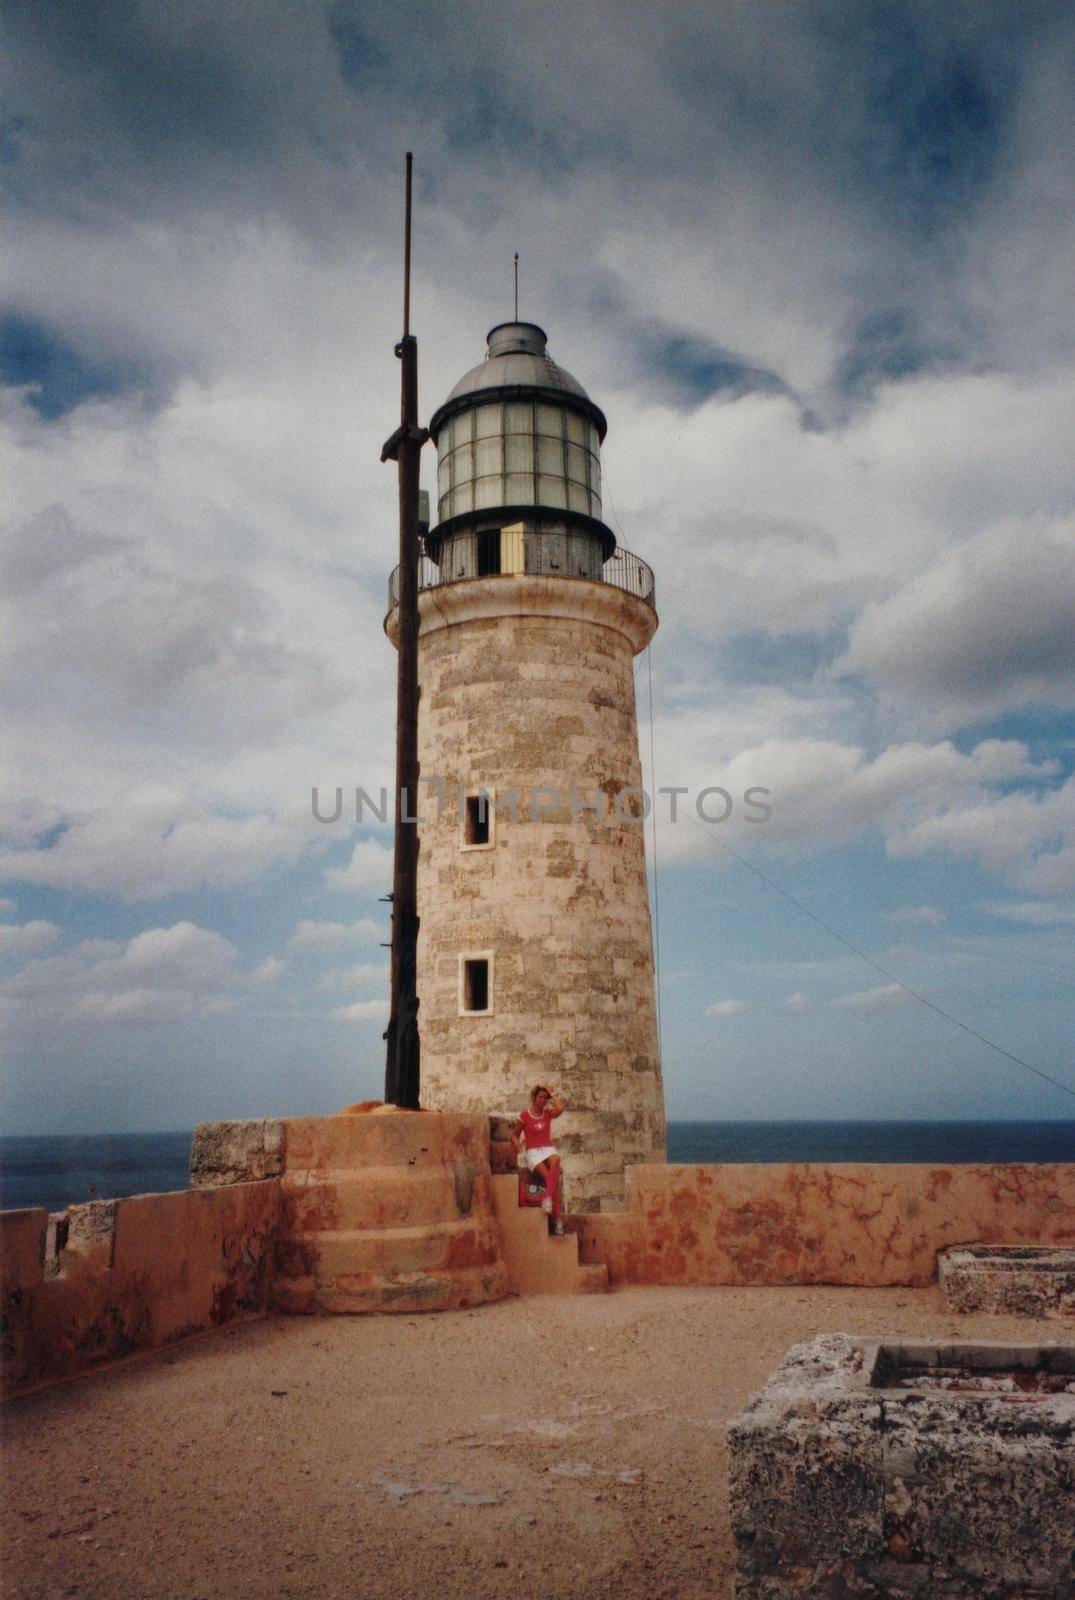 Cuba 1979, Castillo Morro lighthouse by pippocarlot